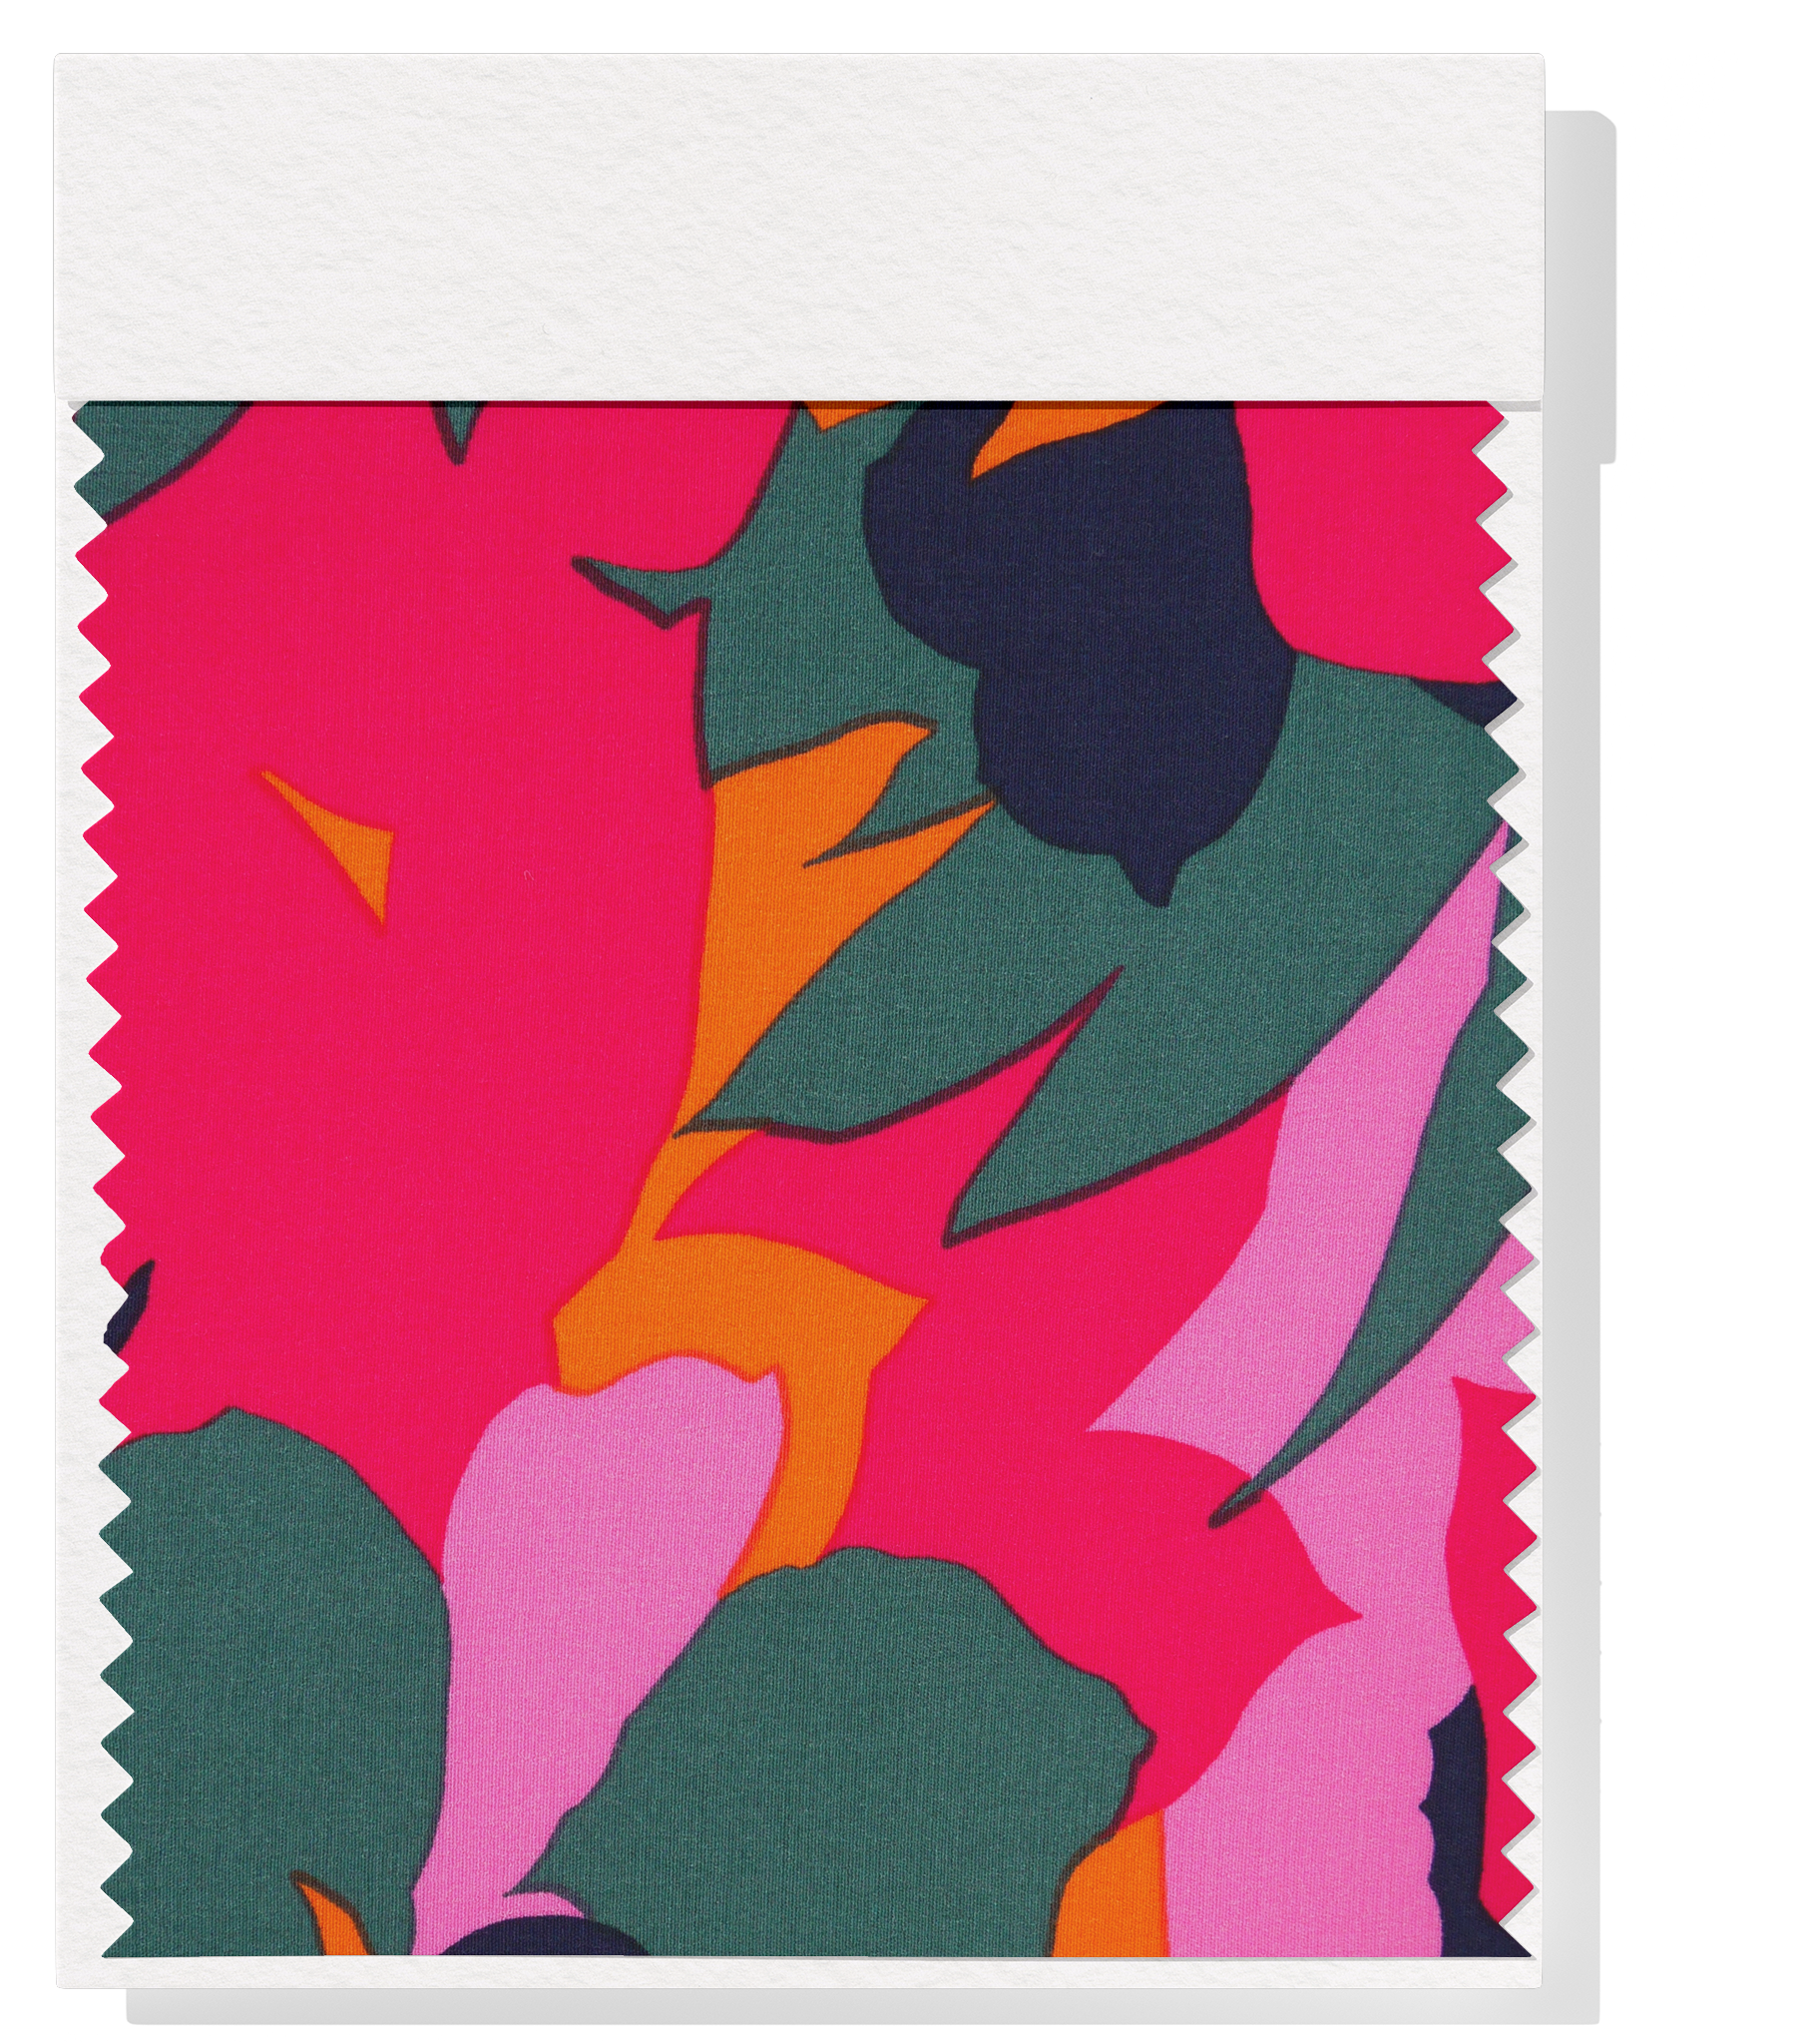 Viscose/ Rayon Crepe Print $22.00p/m - Green,Pink & Orange